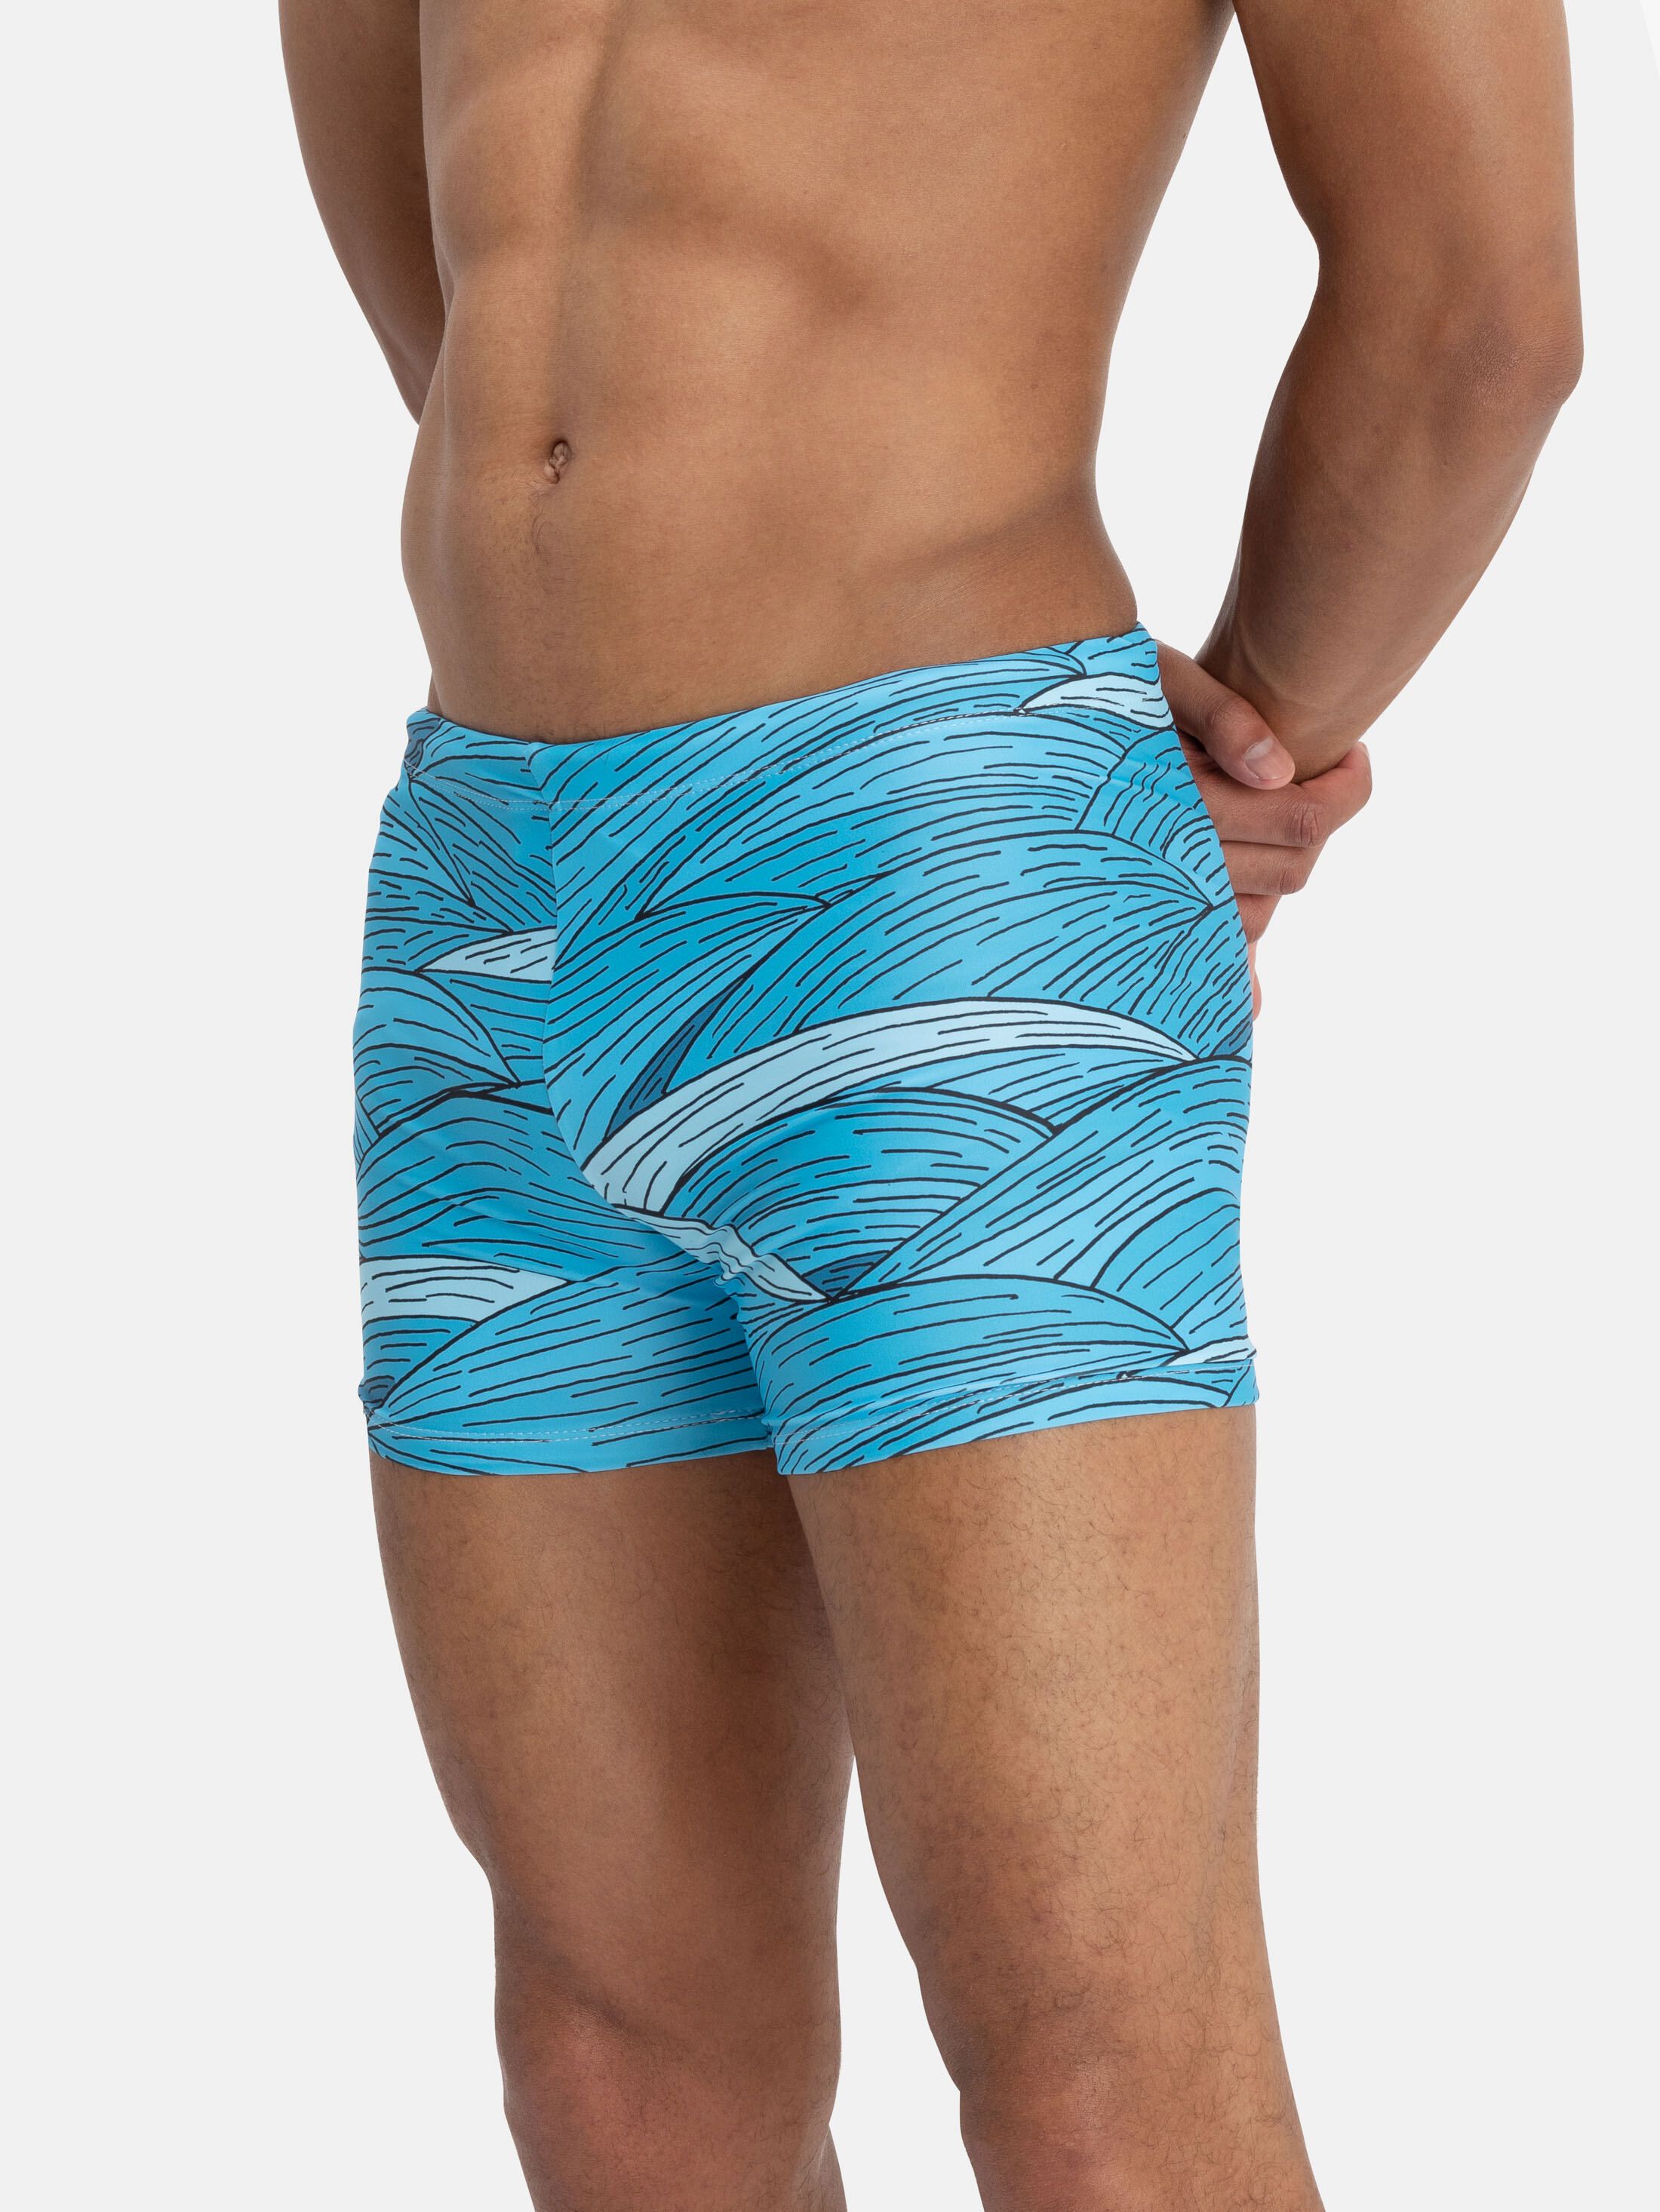 personalised printed swimming trunks detail